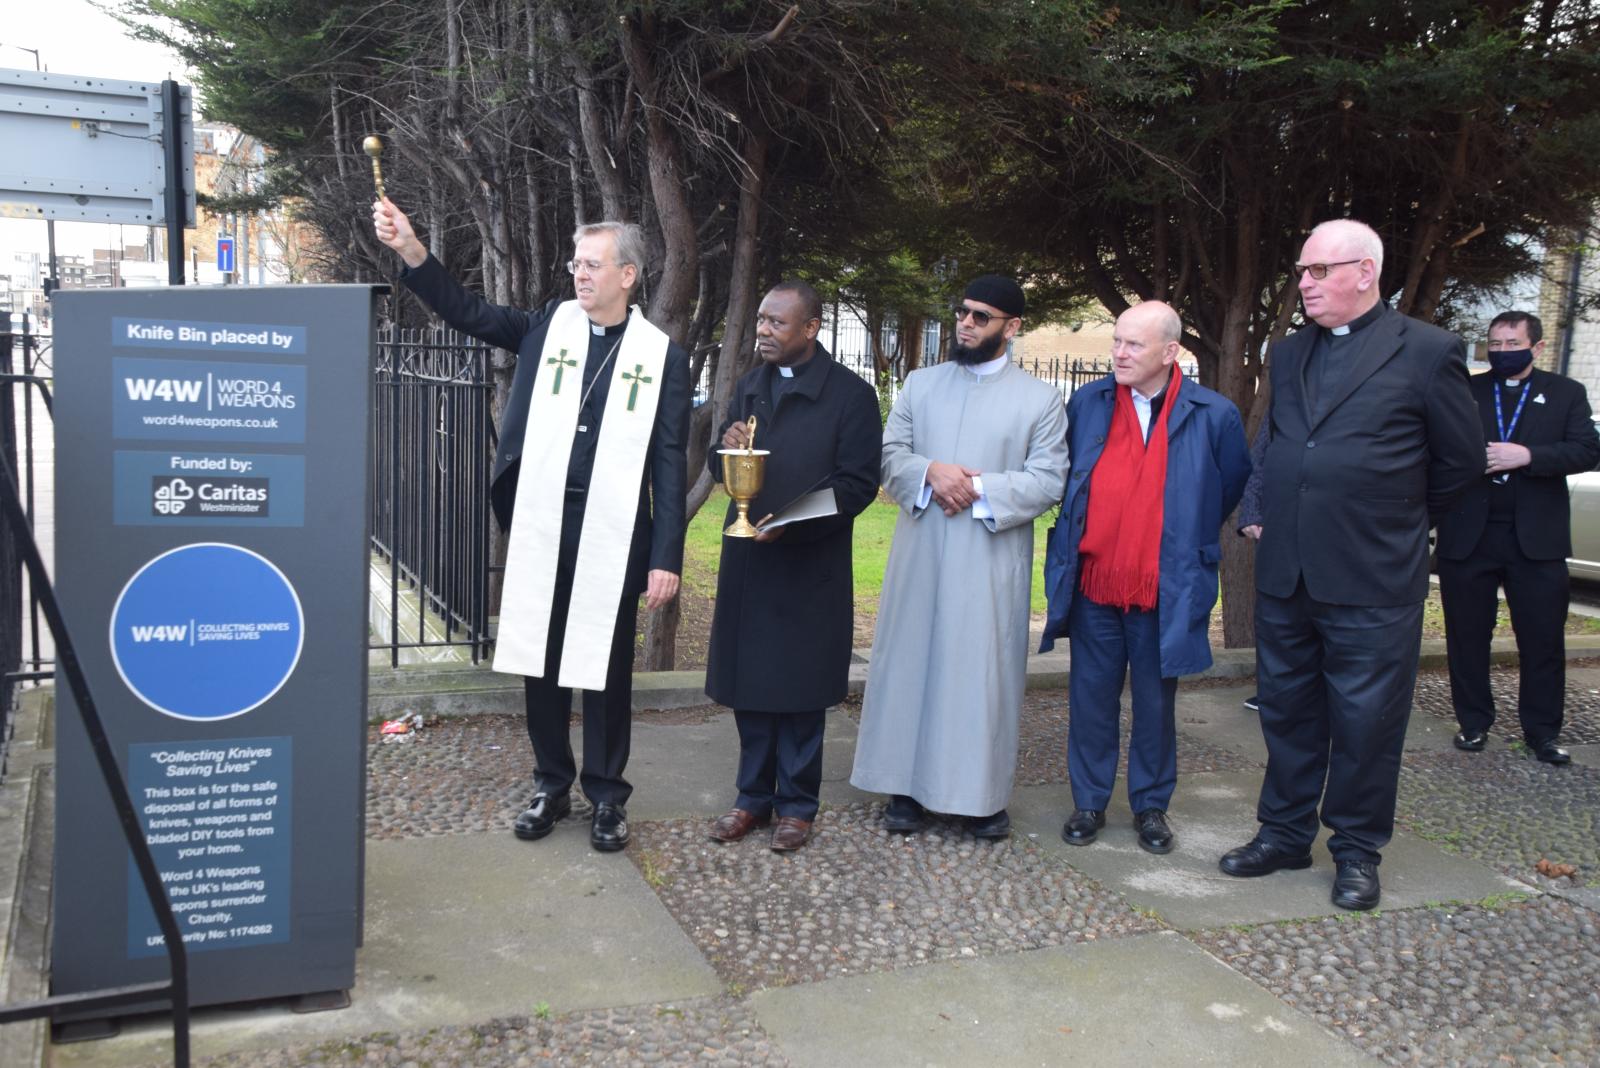 Bishop Hudson blesses new knife bin in Commercial Road - Diocese of Westminster